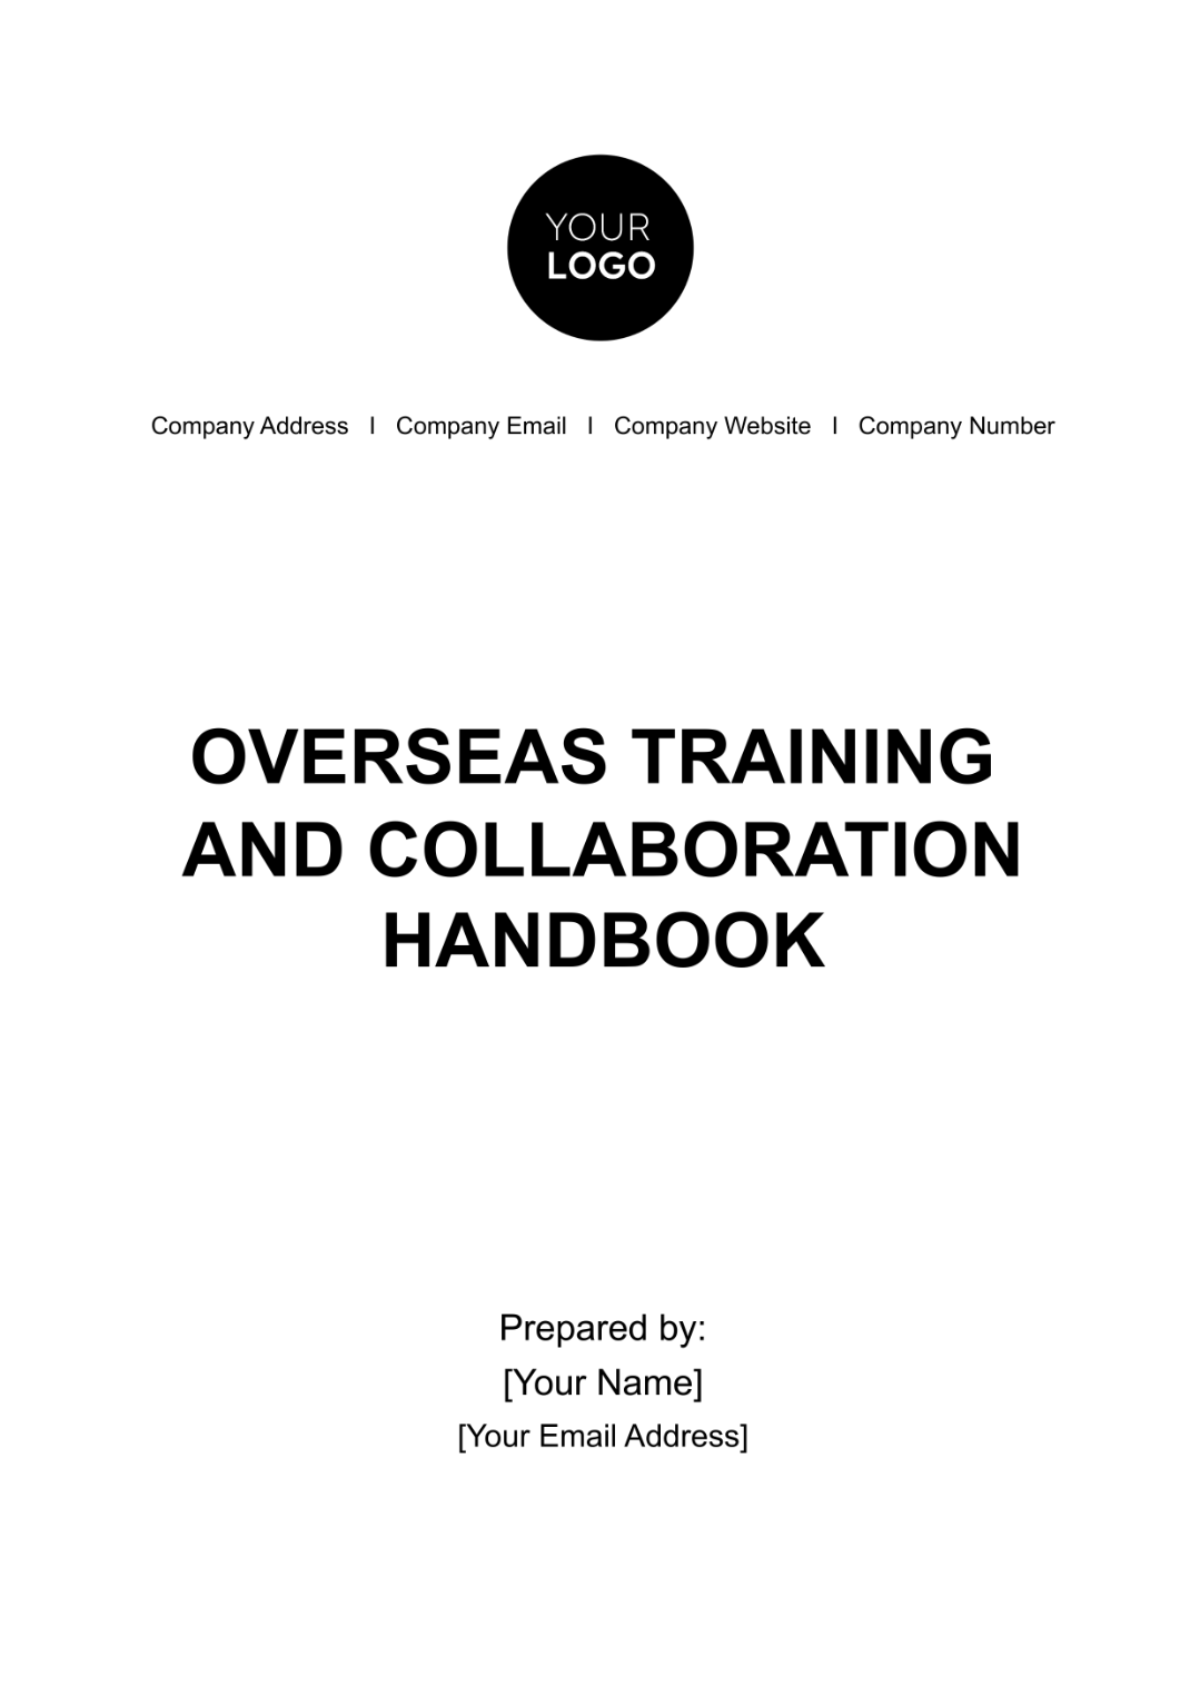 Free Overseas Training & Collaboration Handbook HR Template